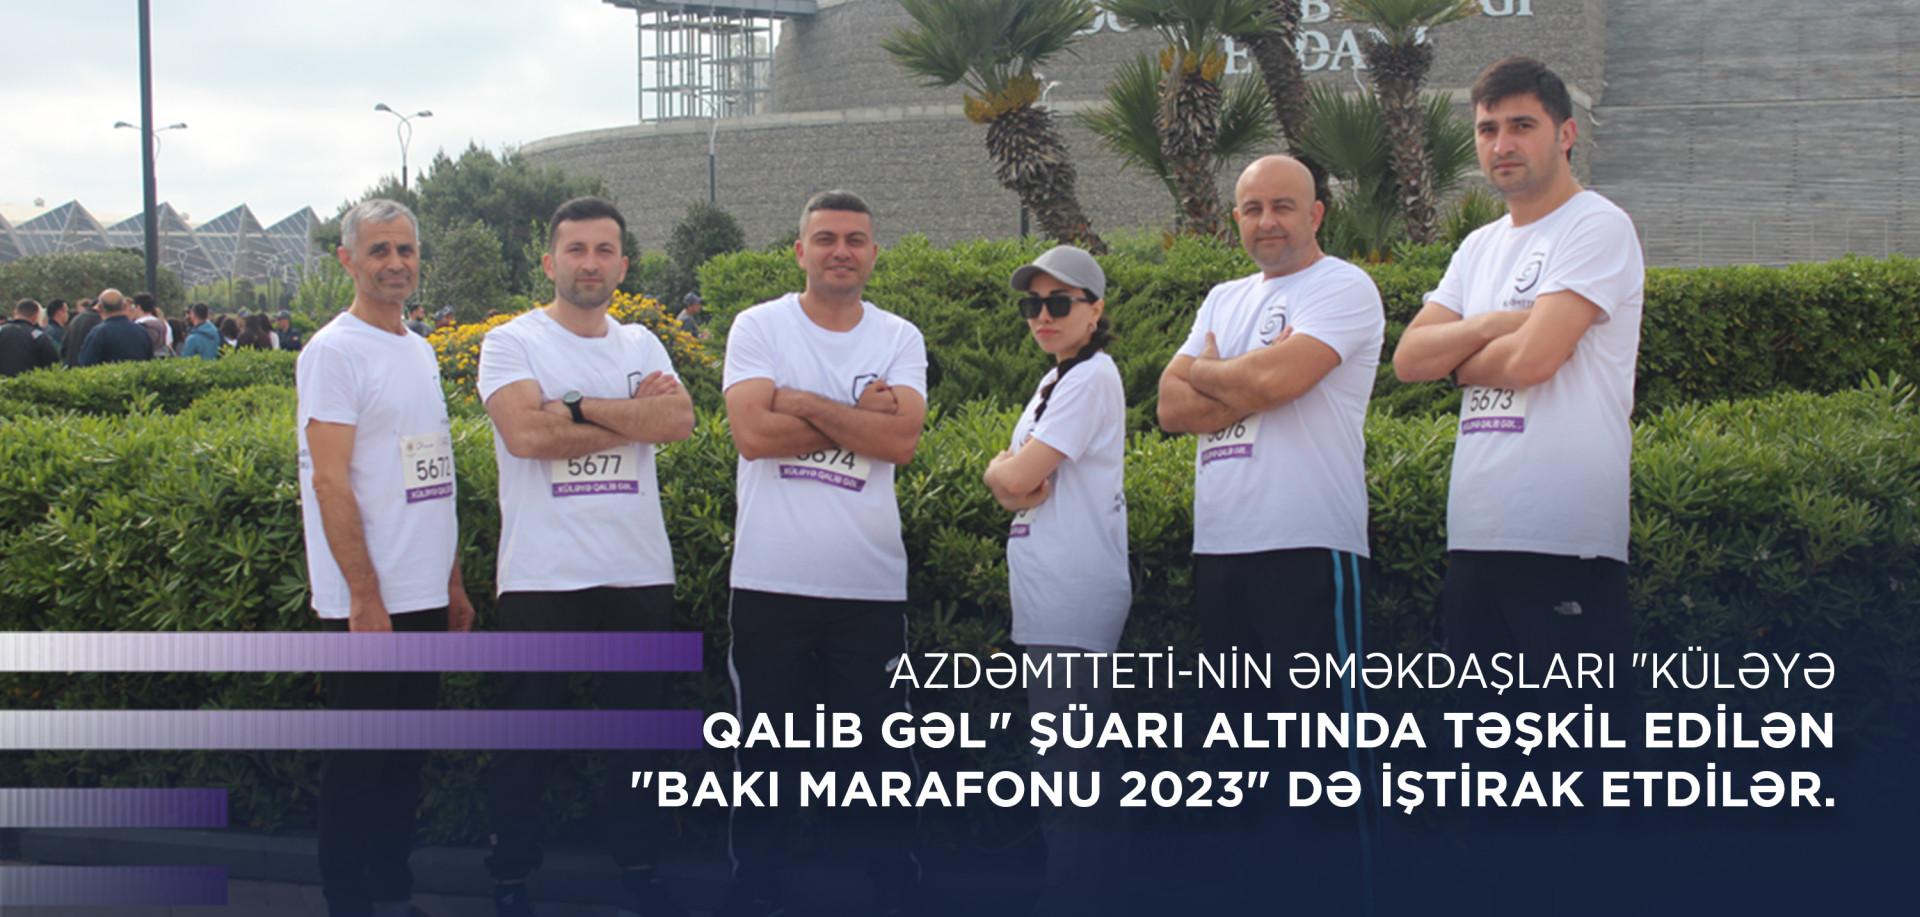 Employees of AzDAMTTETI participated in Baku Marathon 2023 organized under the slogan "Beat the wind"